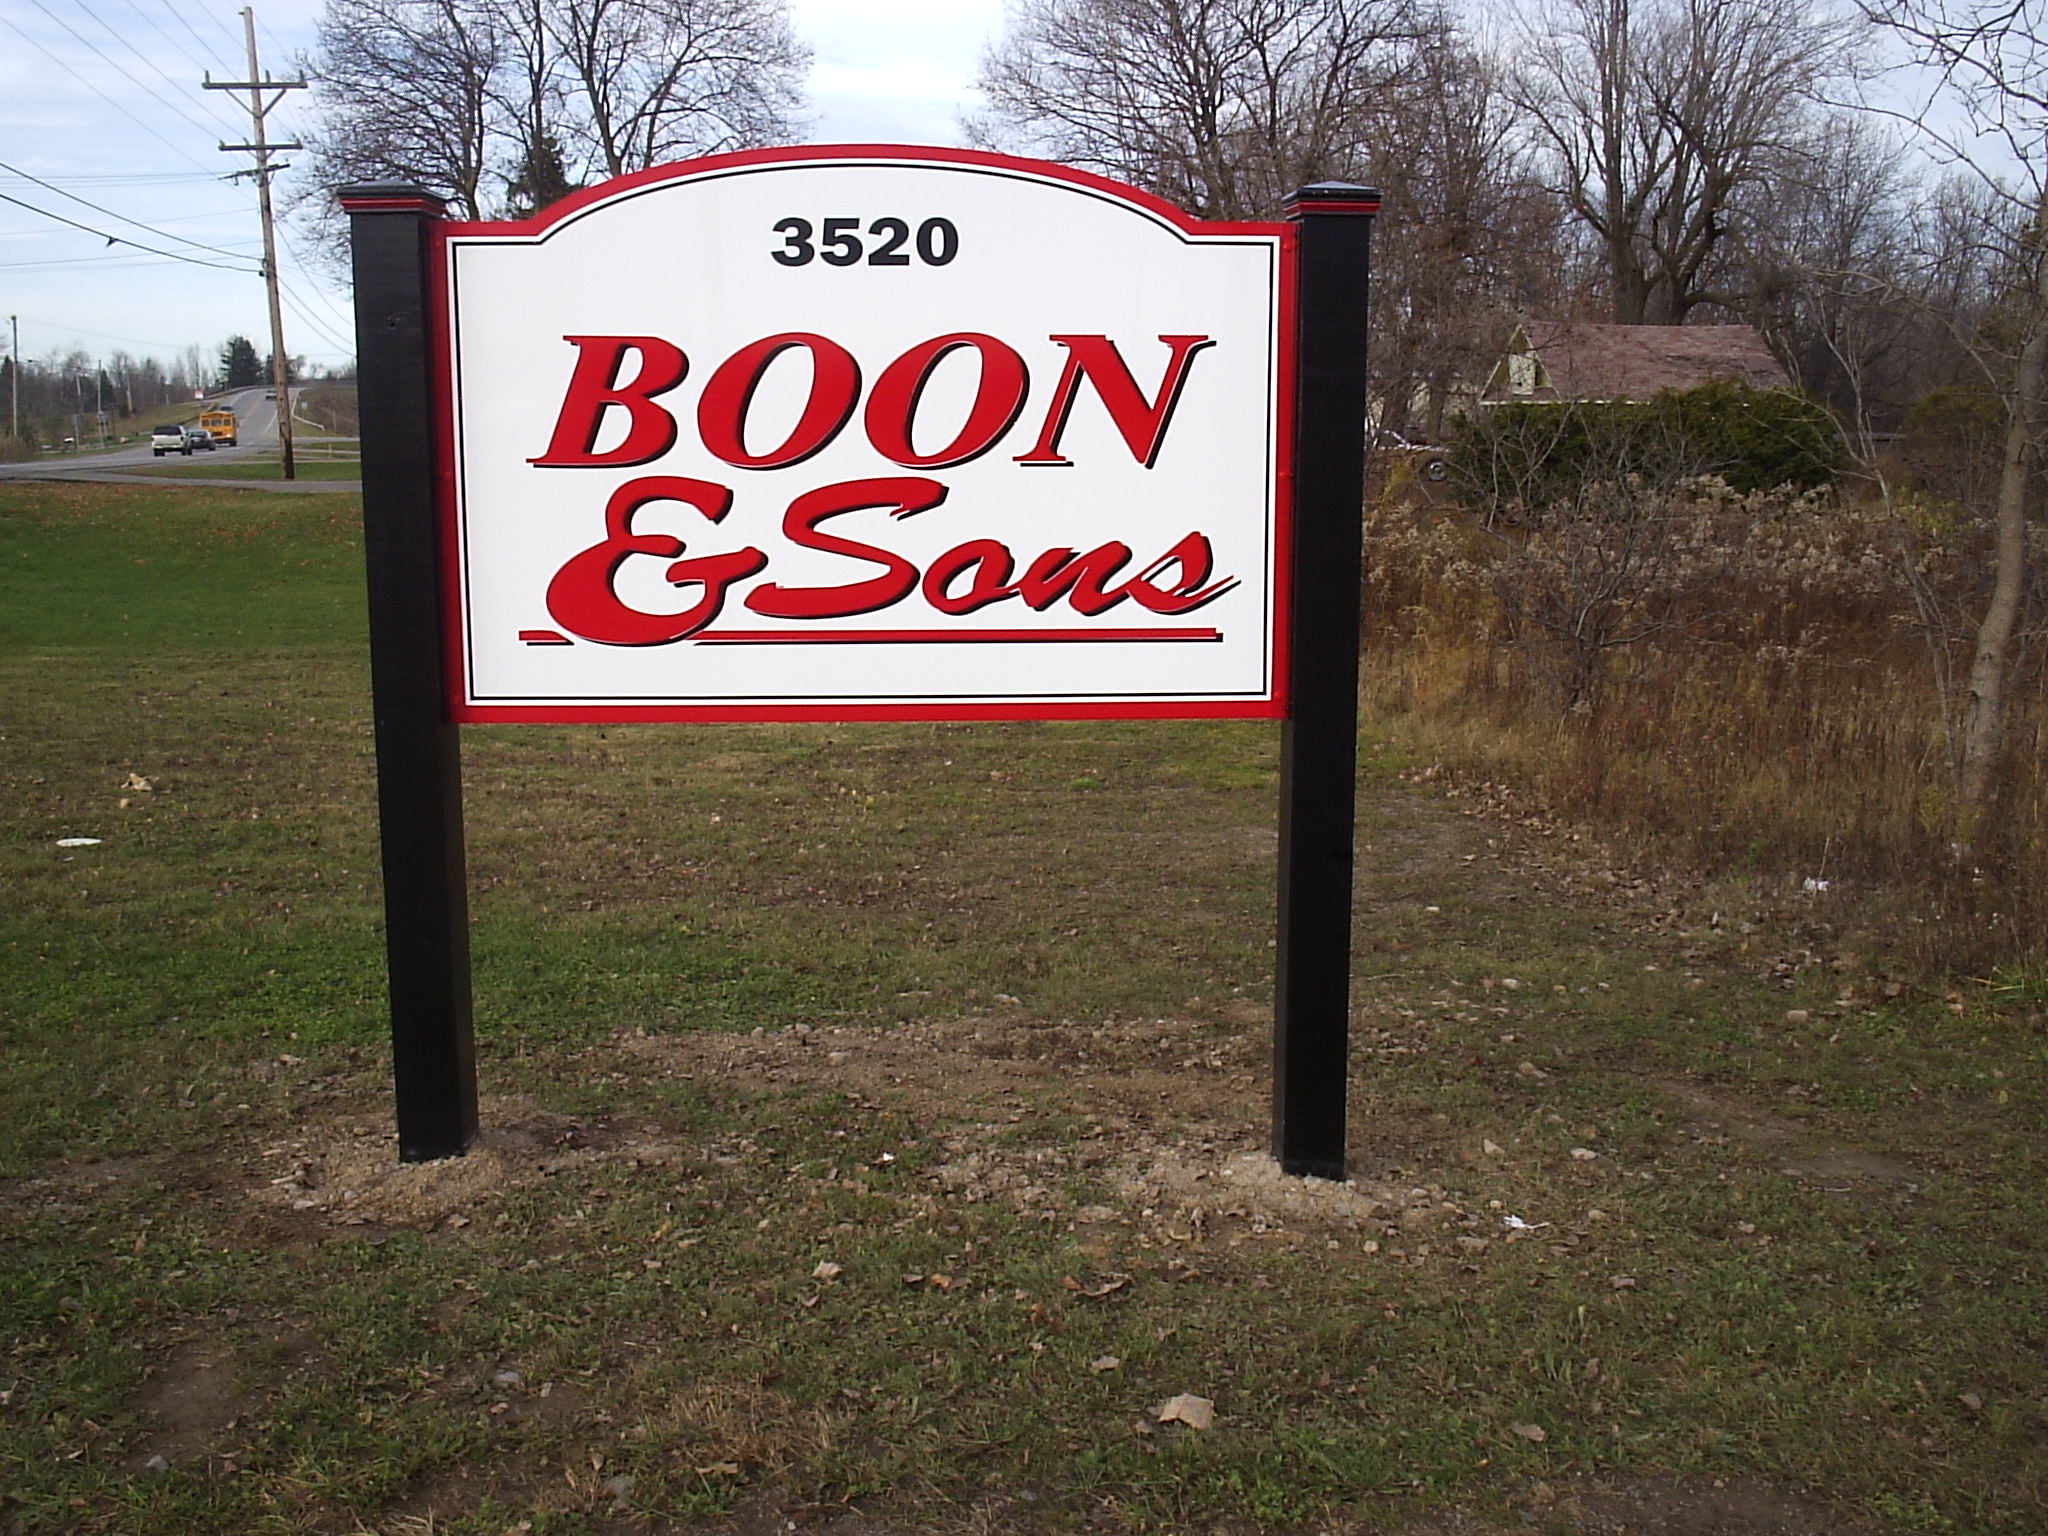 Boon & Sons .JPG